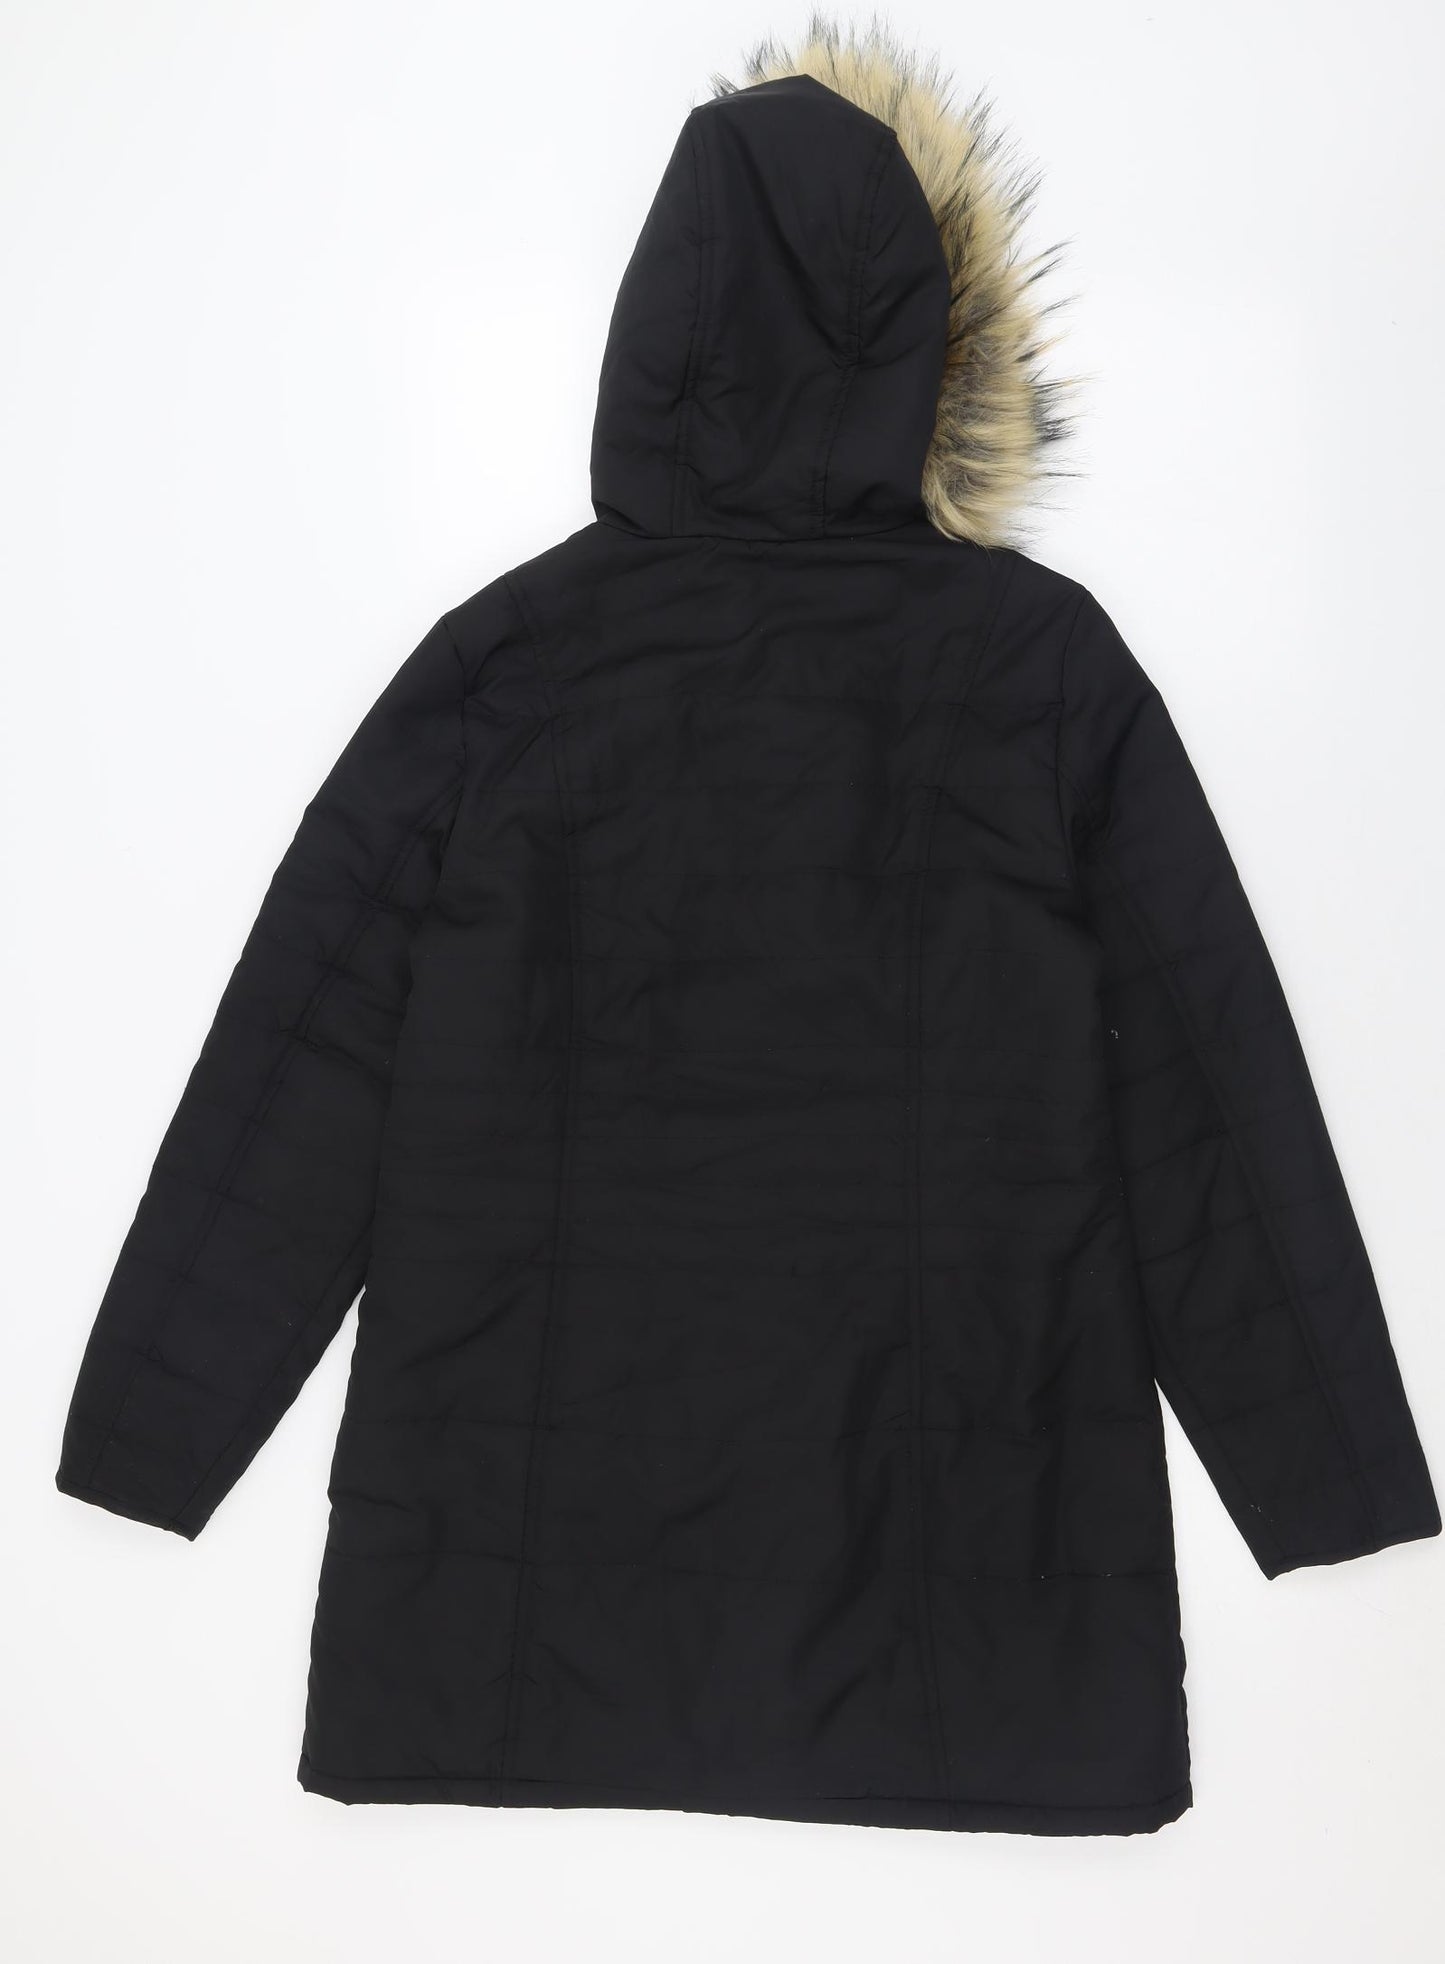 Centigrade Womens Black   Parka Coat Size XS  Zip